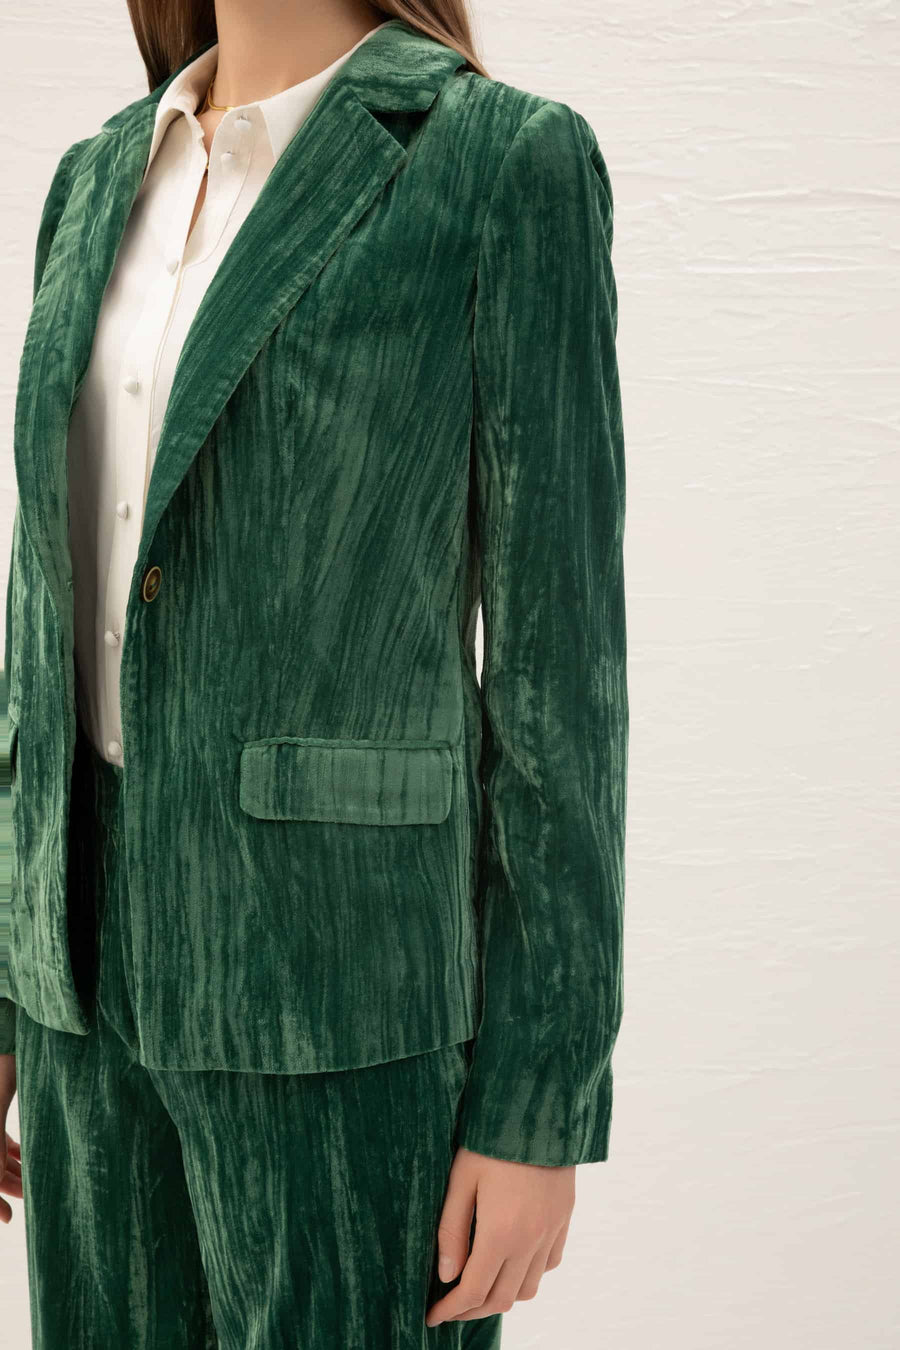 GDS Aliette Velvet Jacket | Green JACKETS autumn-winter BRUNCH CASUAL Catch GDS GREEN JACKETS L M S SALE 40 % WORK XL XS